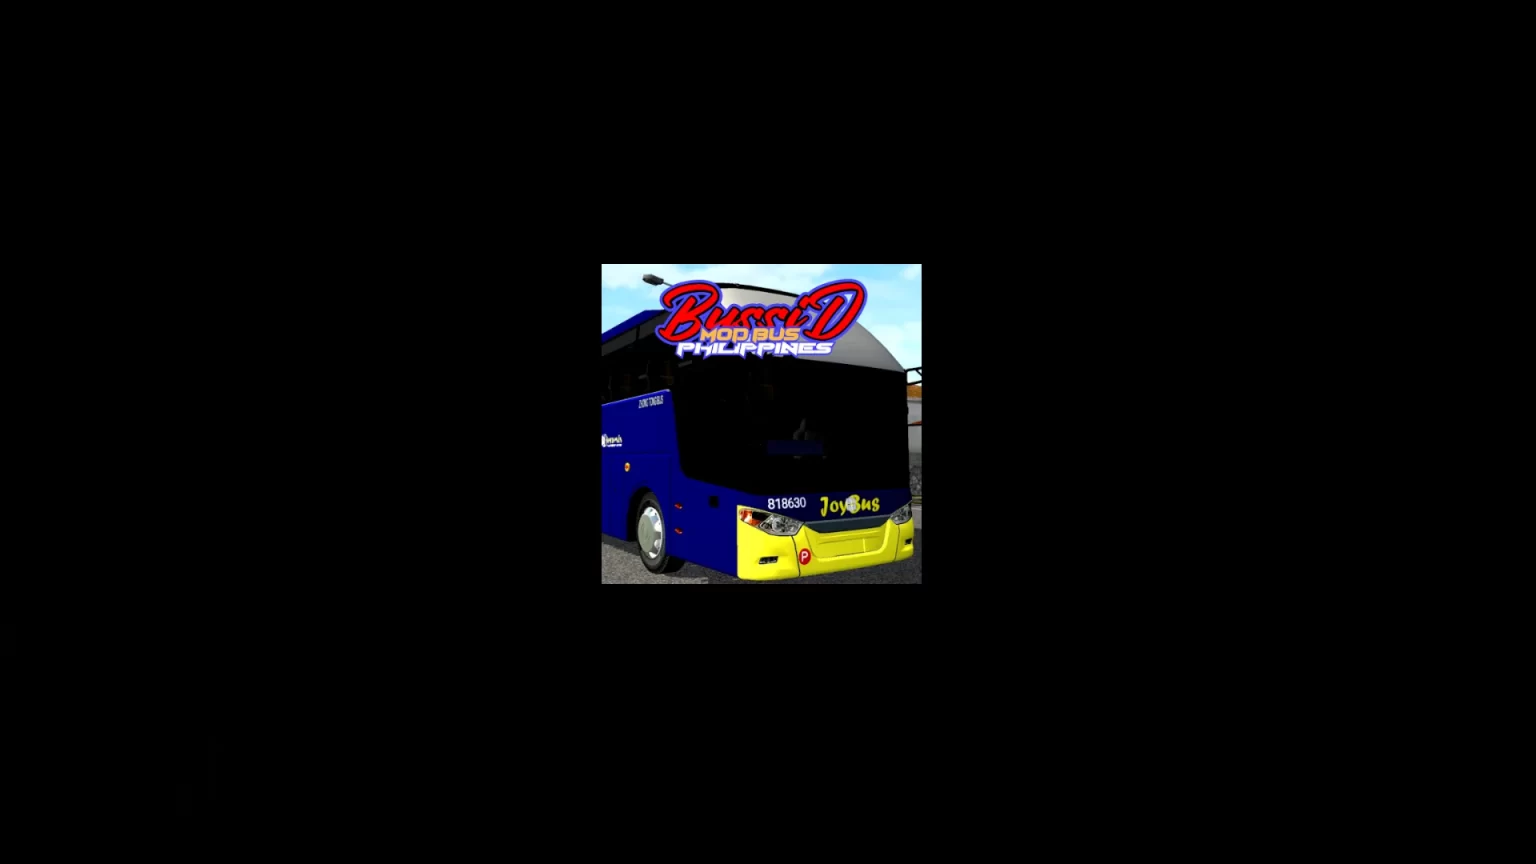 990980 1 5 1536x864 - Bussid Philippines Mod Apk V1 (Unlimited Money) Latest Version